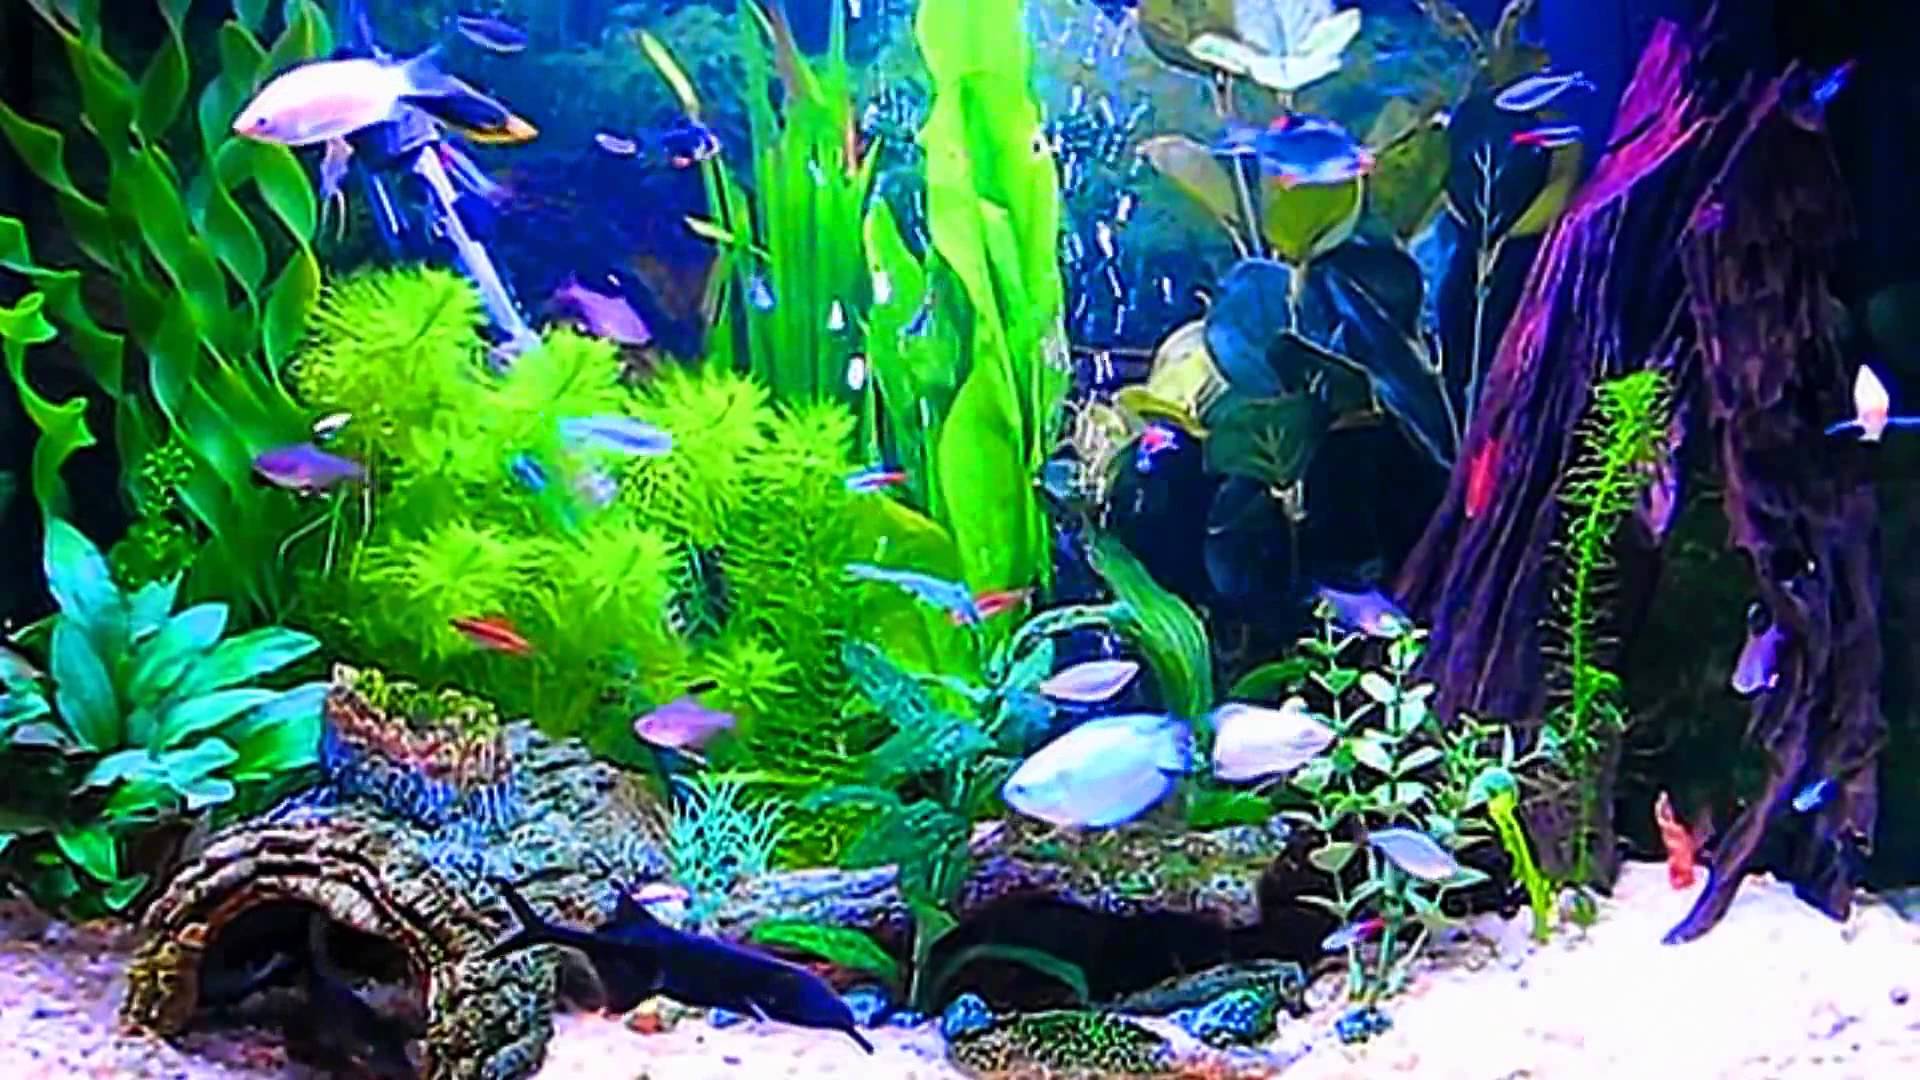 Aquarium Backgrounds Images  Free Download on Freepik